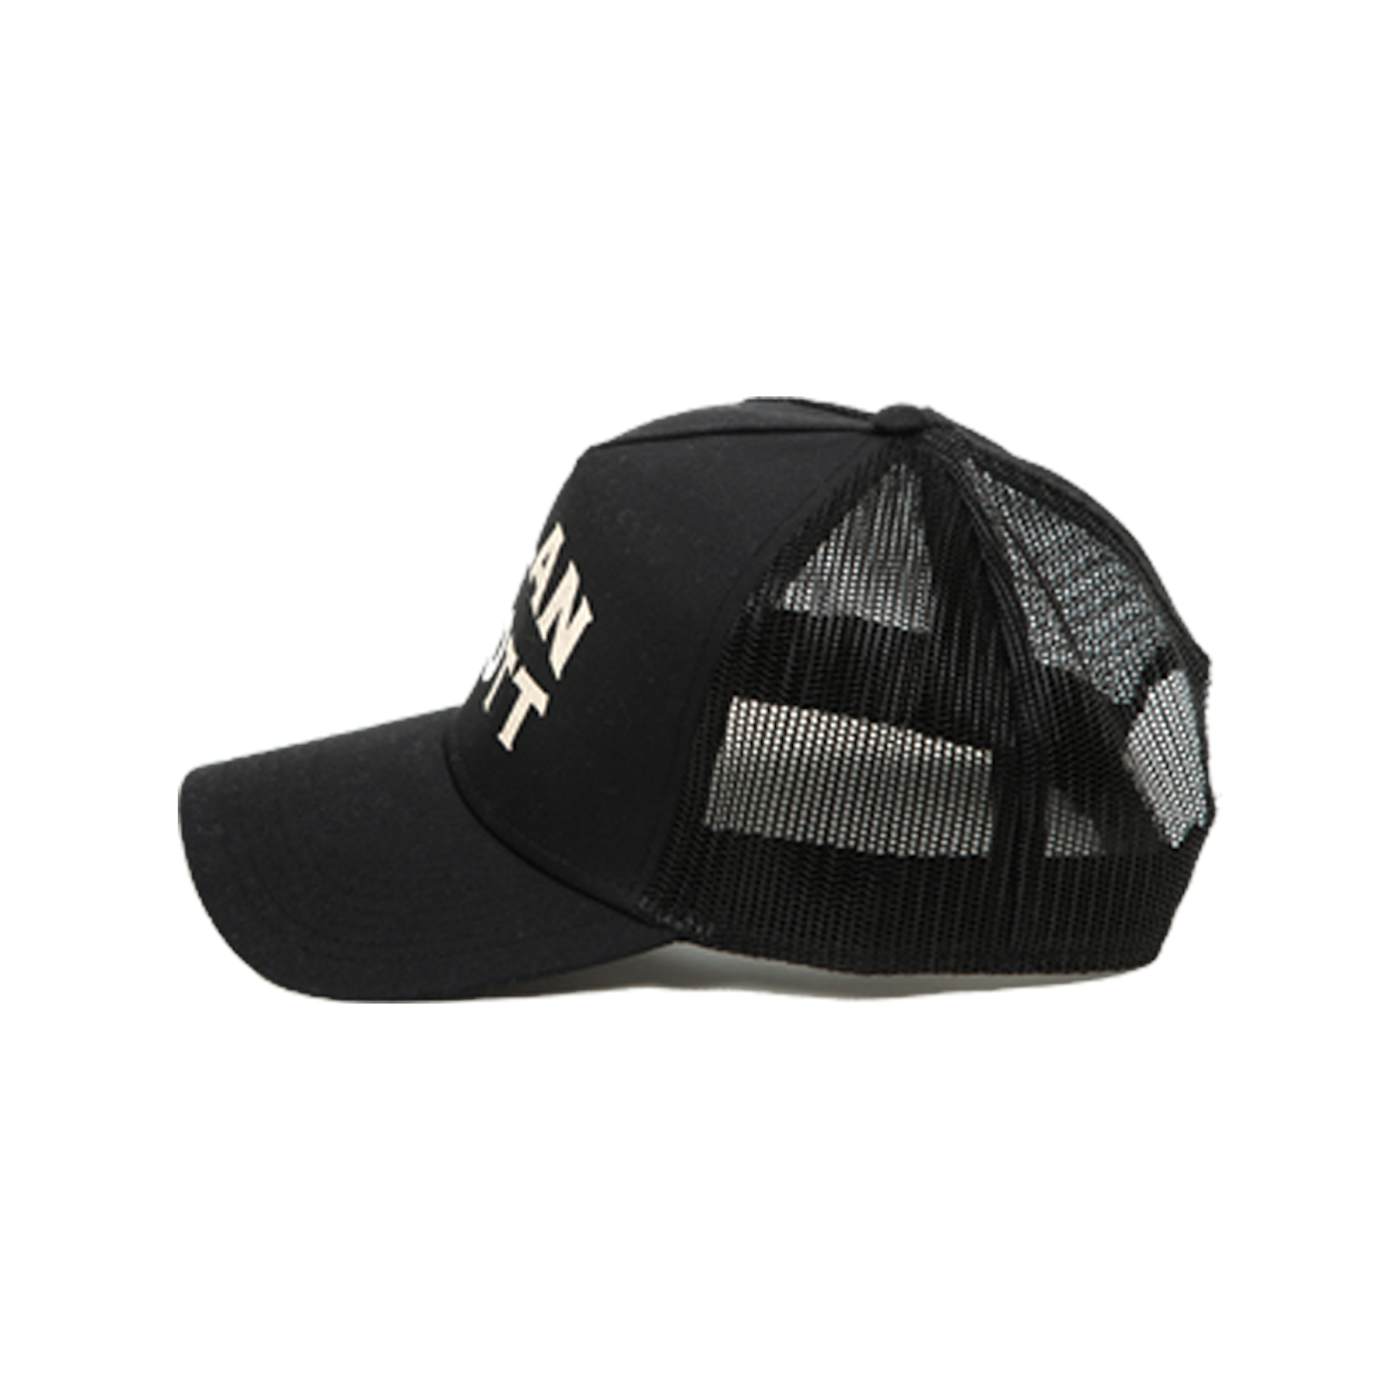 Dylan Scott Logo Hat - Black